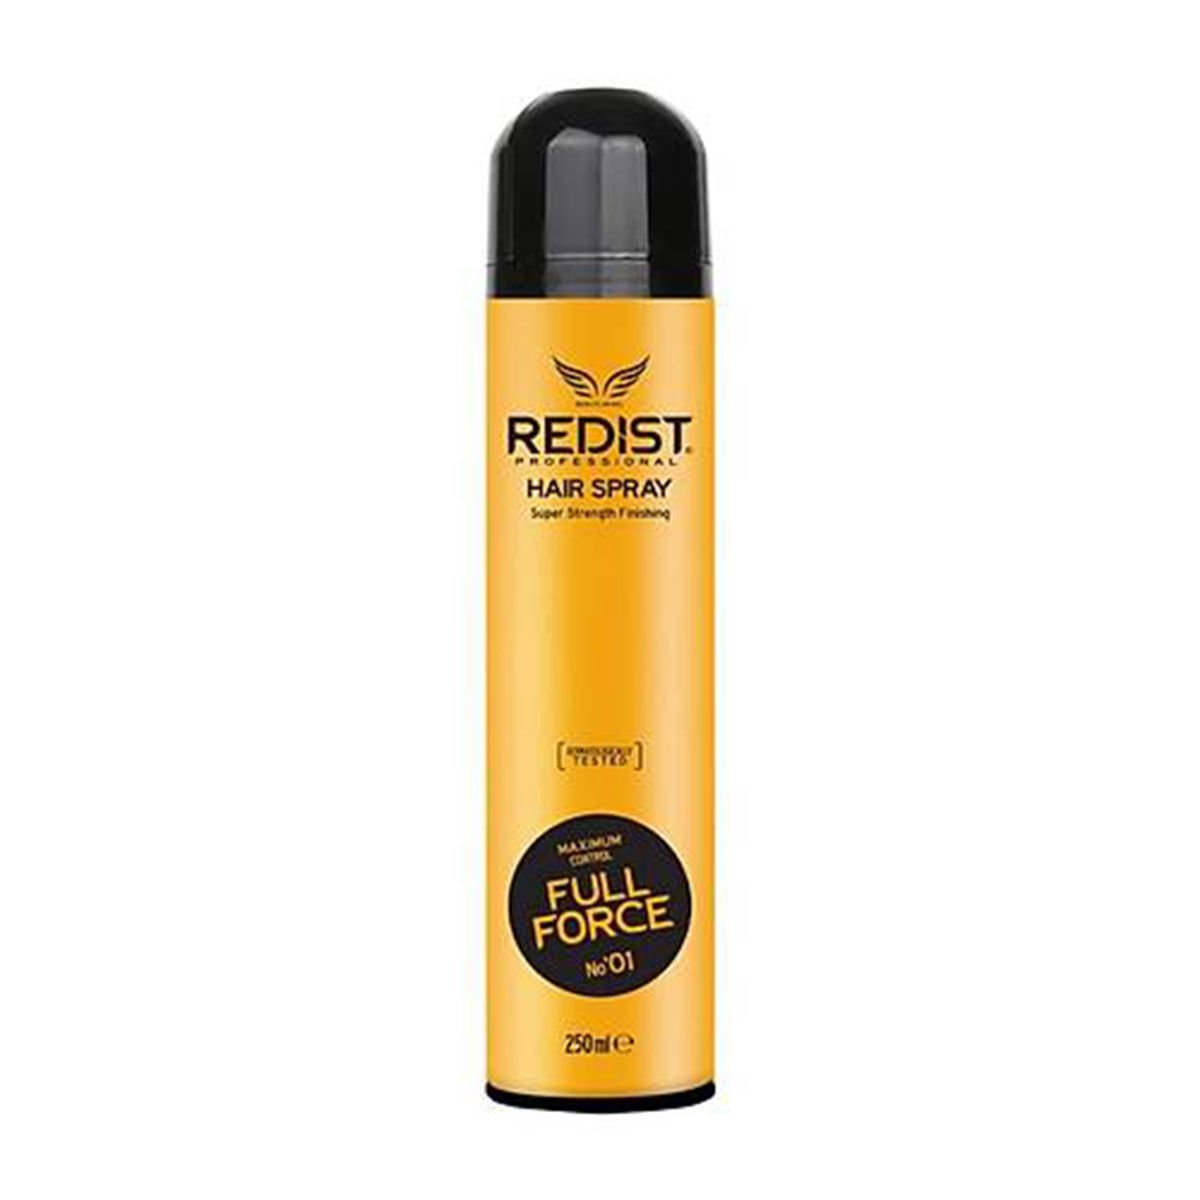 Redist Hair Spray Full Force No'01 250 ml